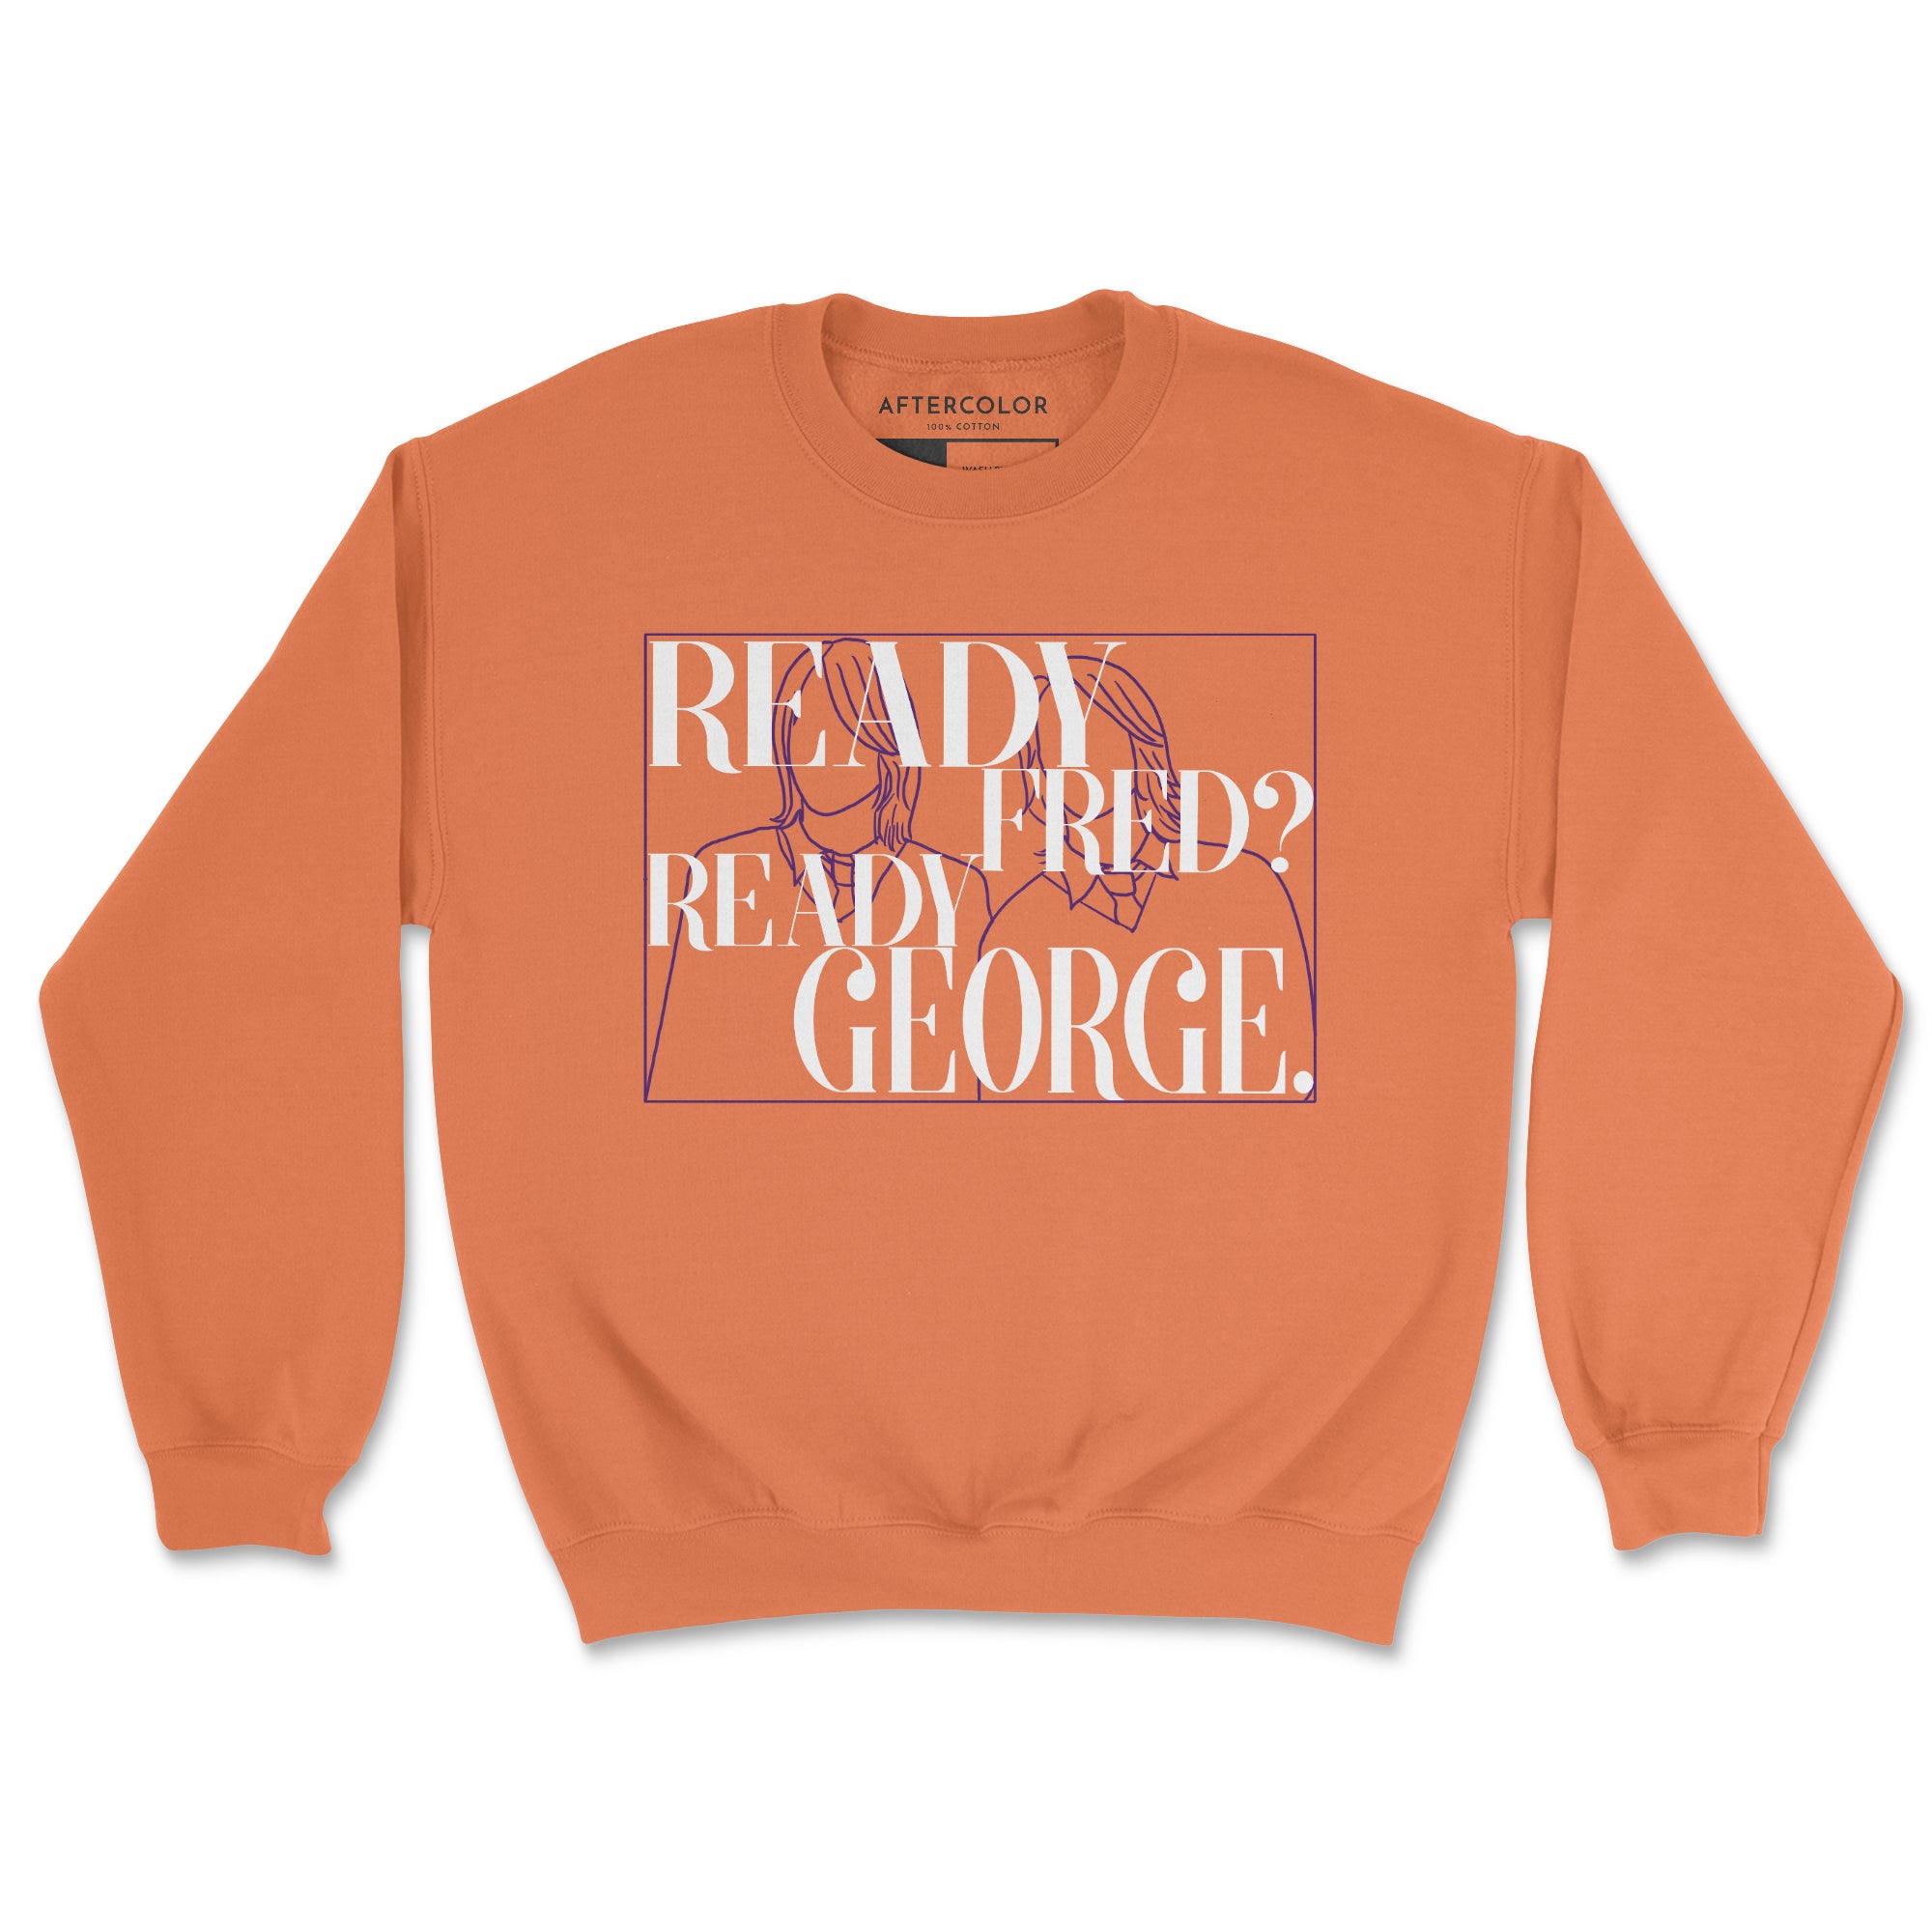 Ready Fred Ready George Graphics Sweatshirt